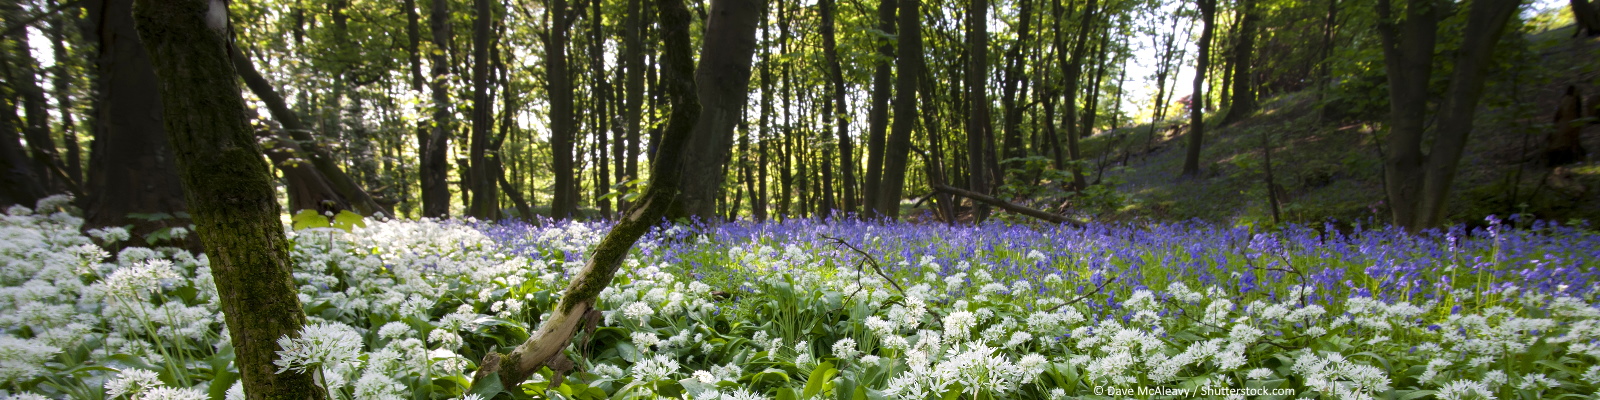 Wild garlic and bluebells flower in a woodland